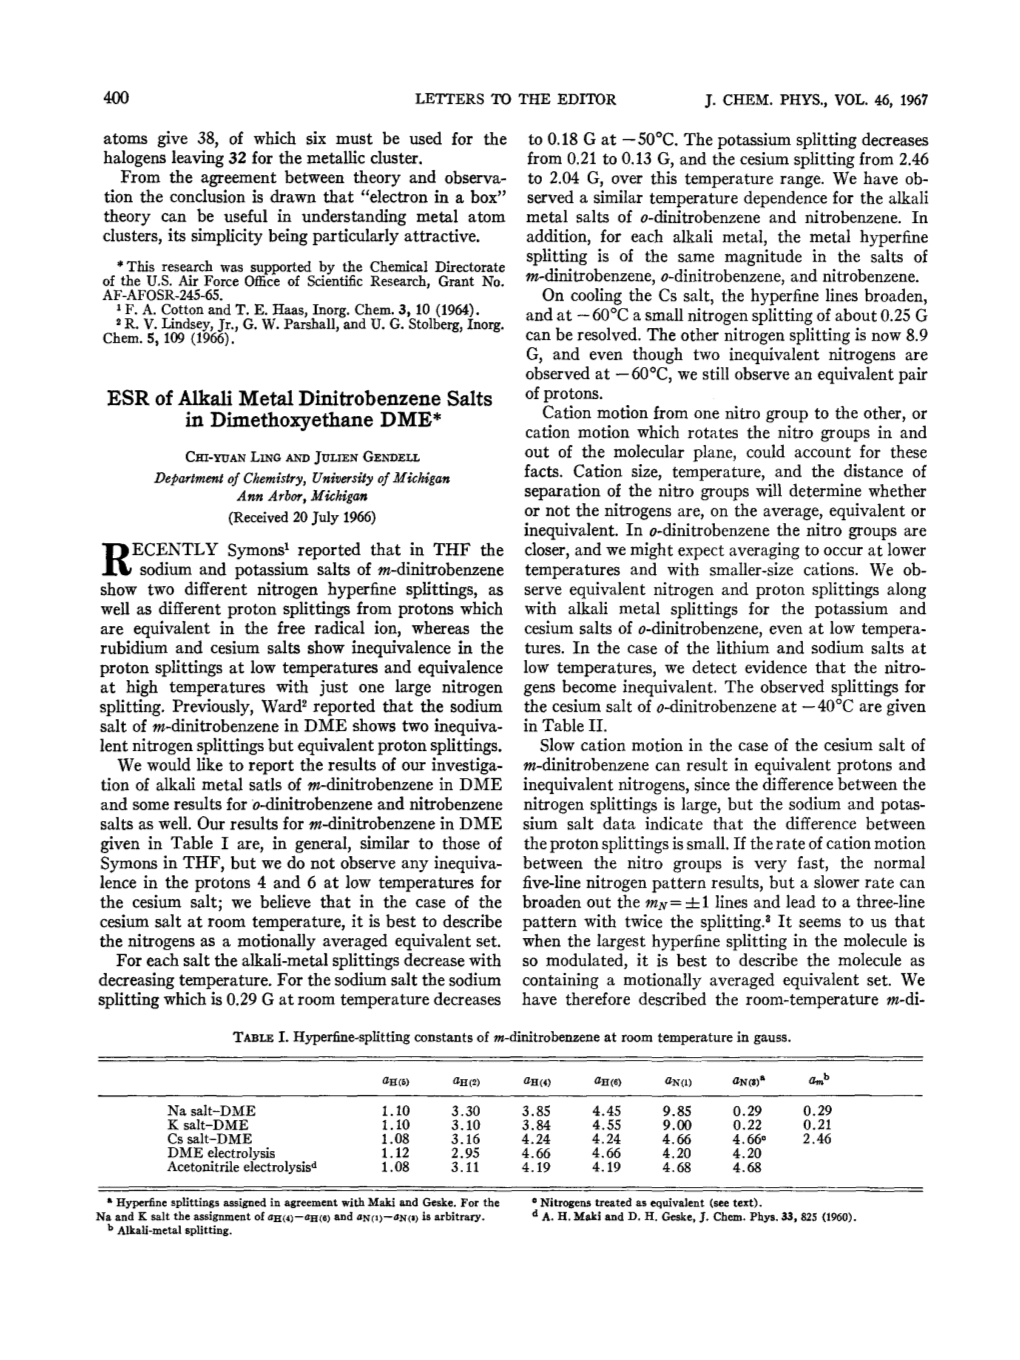 ESR of Alkali Metal Dinitrobenzene Salts in Dimethoxyetbane DME*